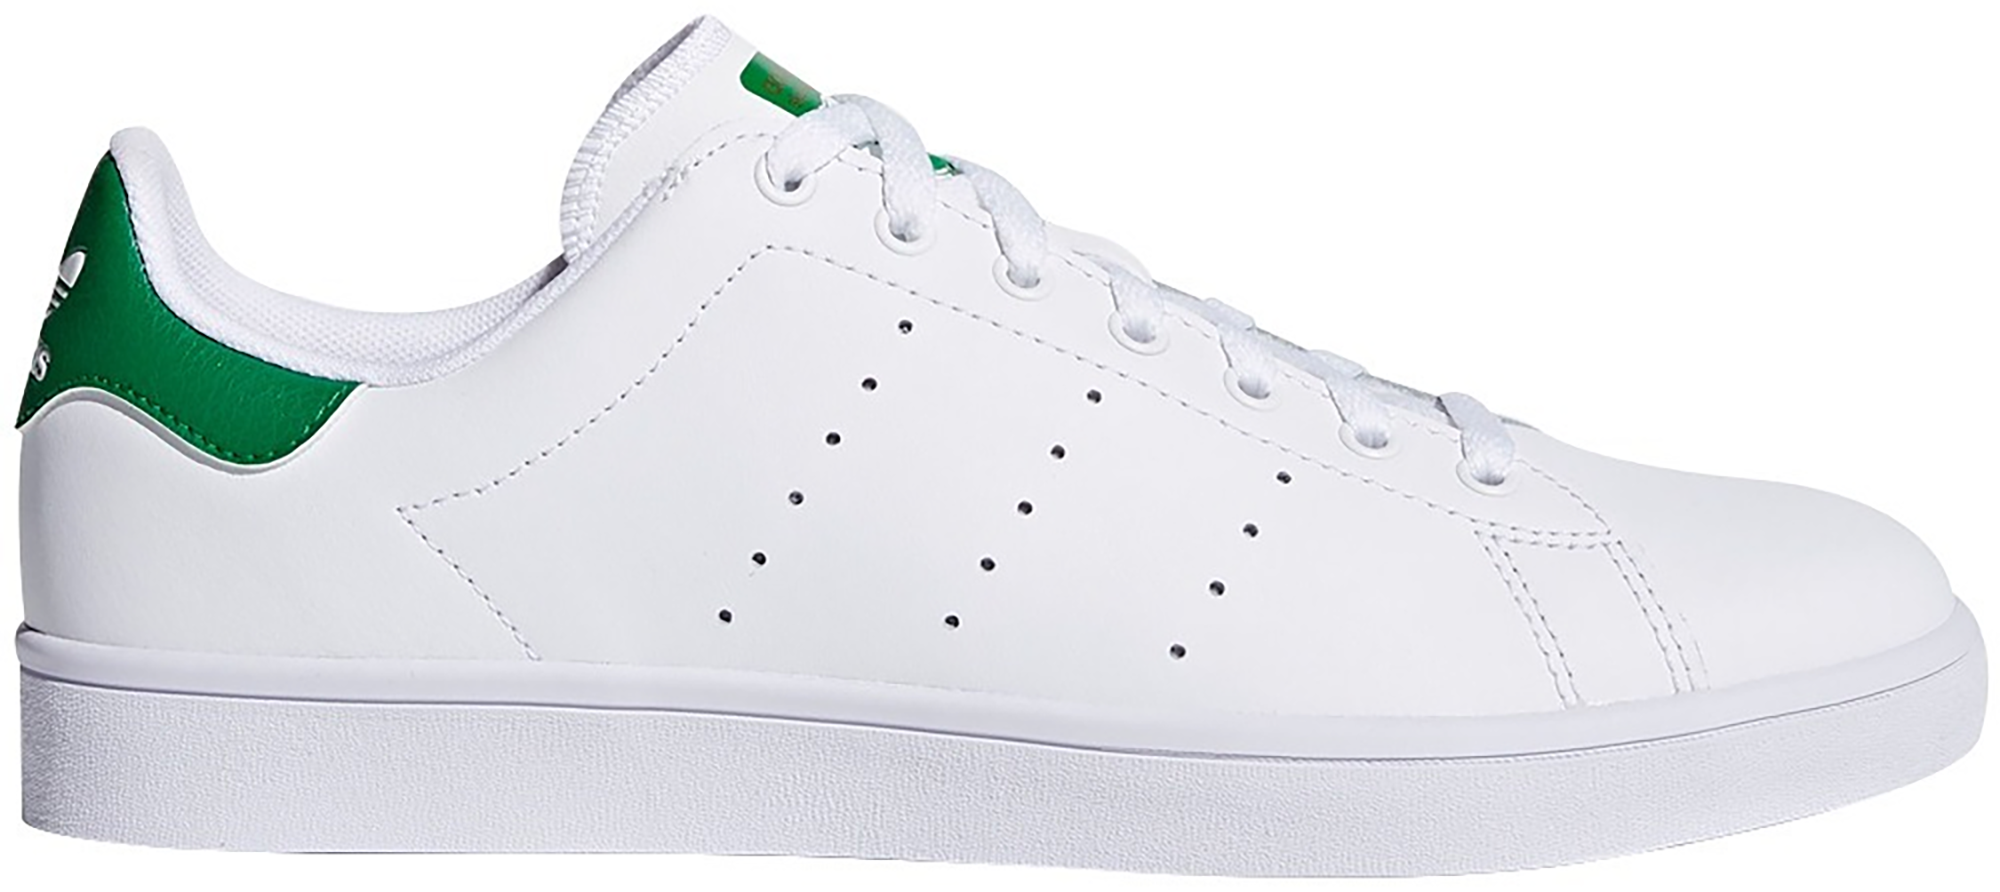 adidas Stan Smith Vulc White Green - B49618